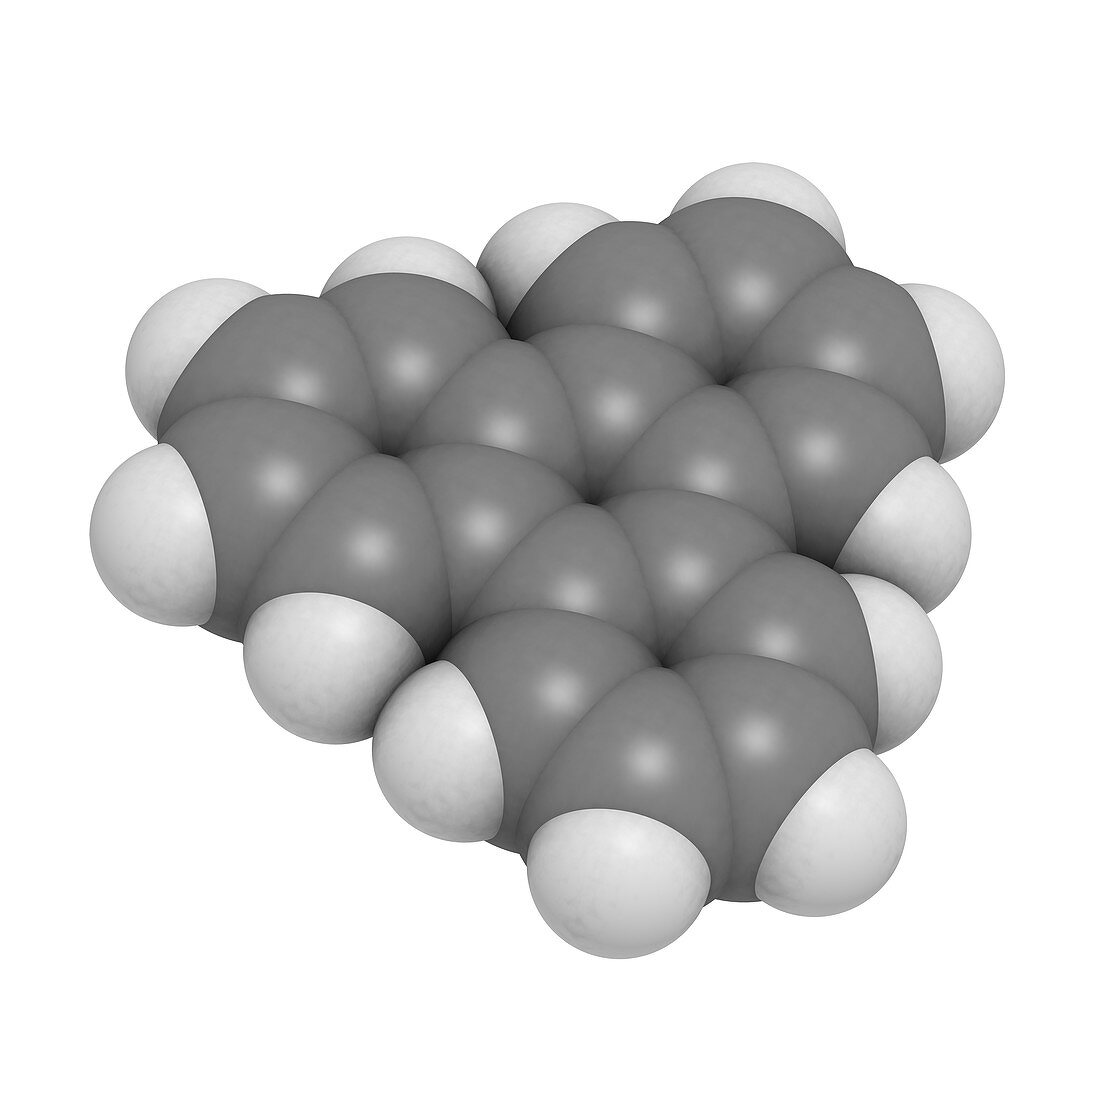 Triphenylene hydrocarbon molecule